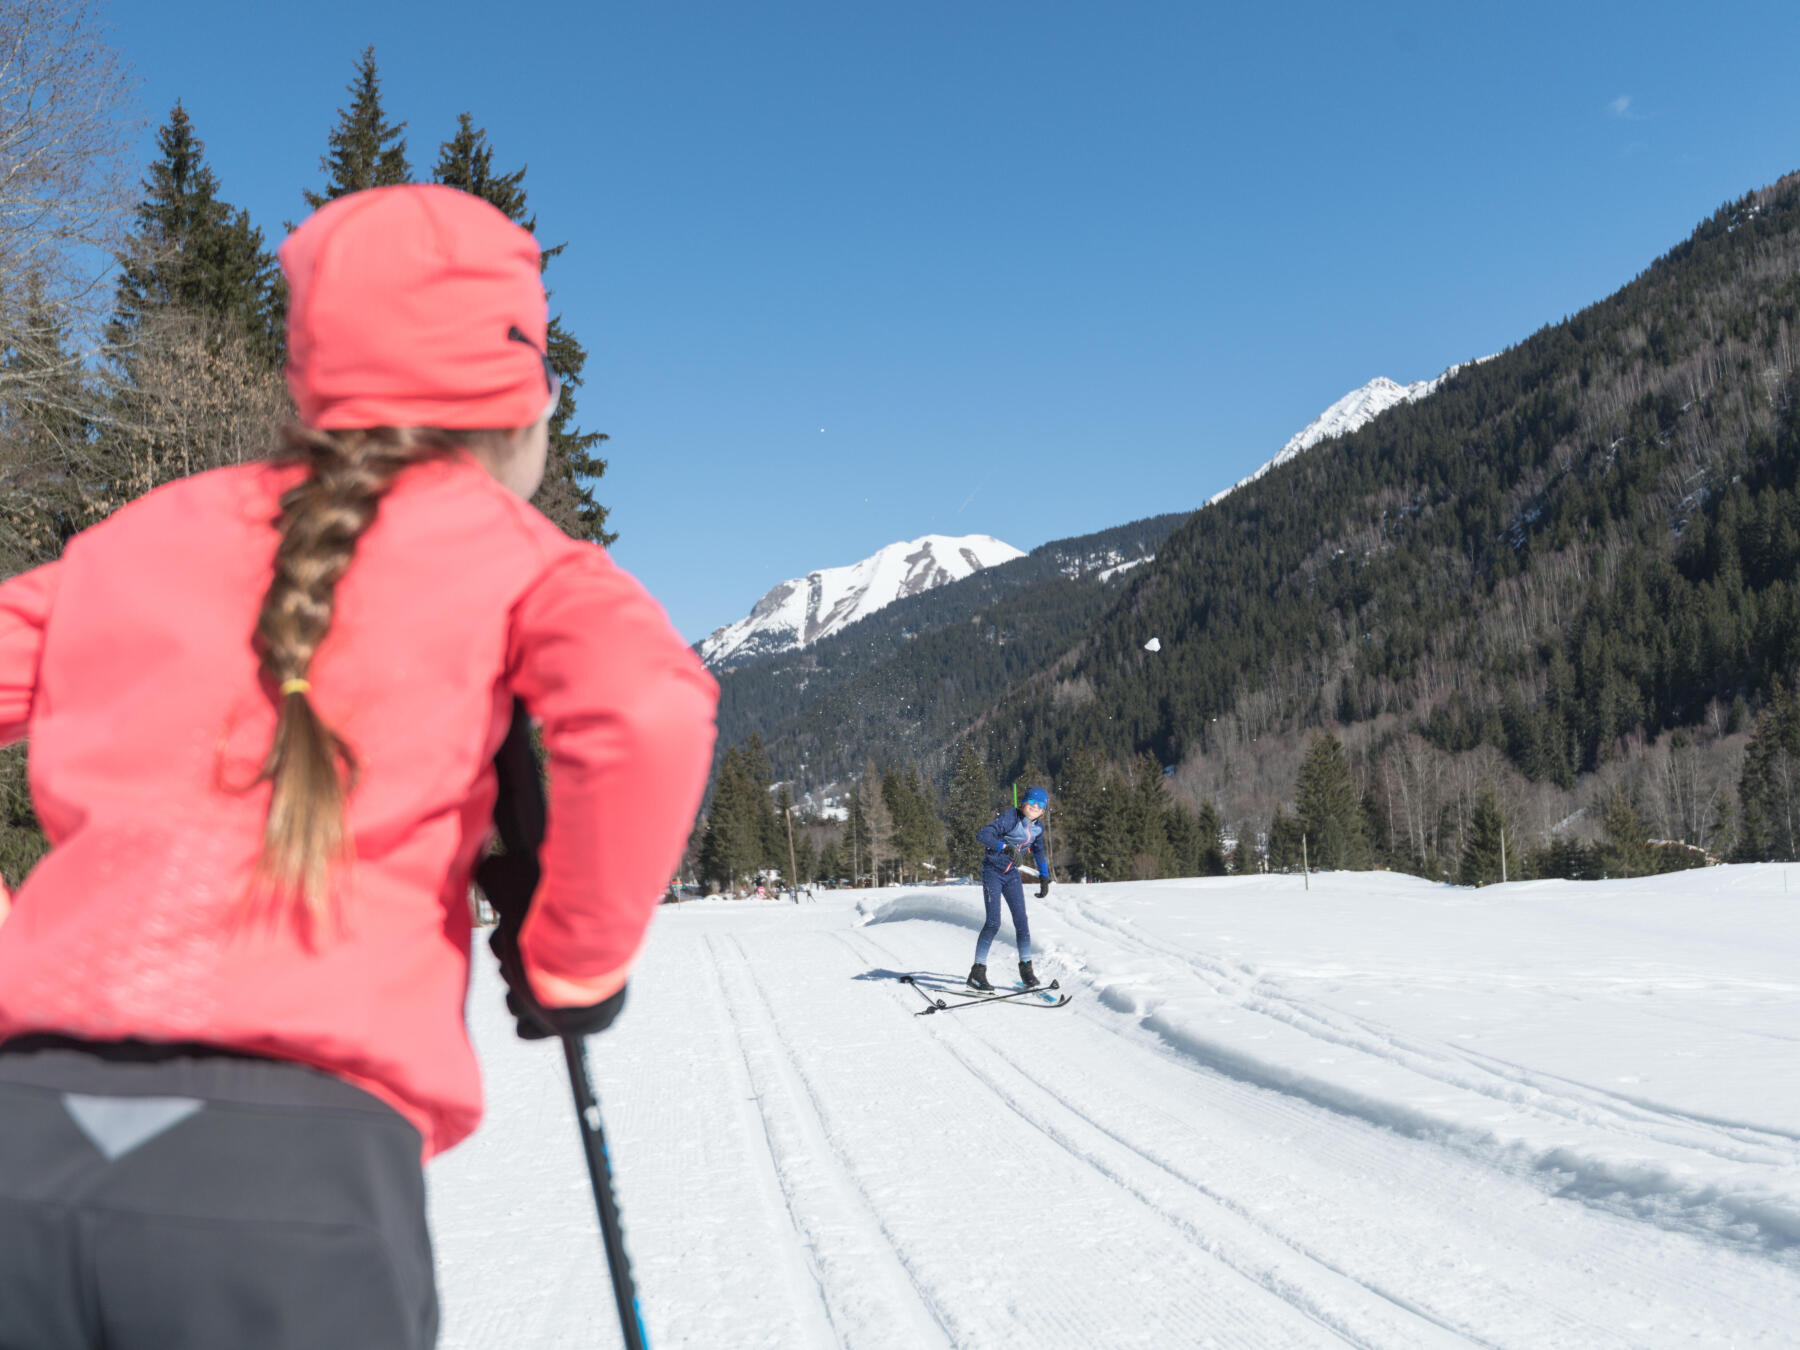 ski touring activities for kids